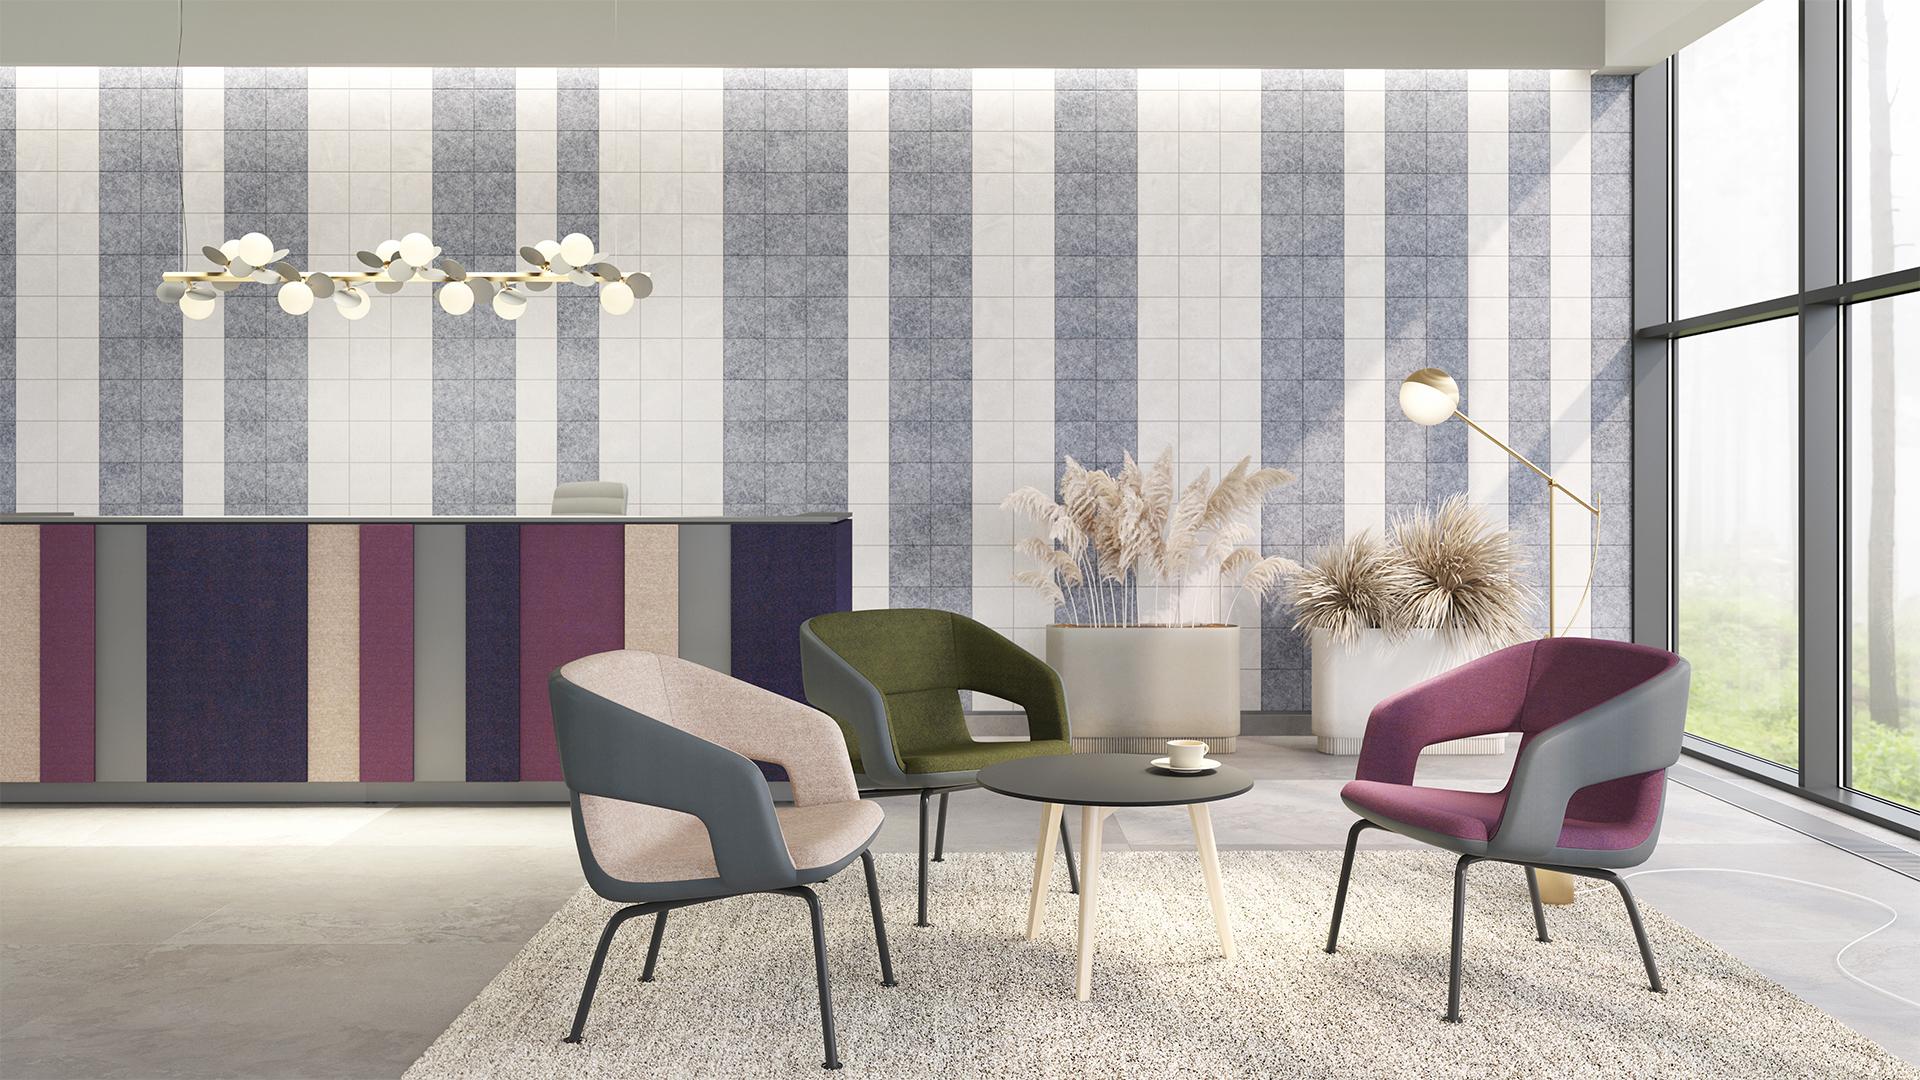 tiles-ACOUSTIC-ARTWORK-lounge-chairs-TWISTSIT-Soft-reception-furinture-DOMINO-interiors-HQ-8